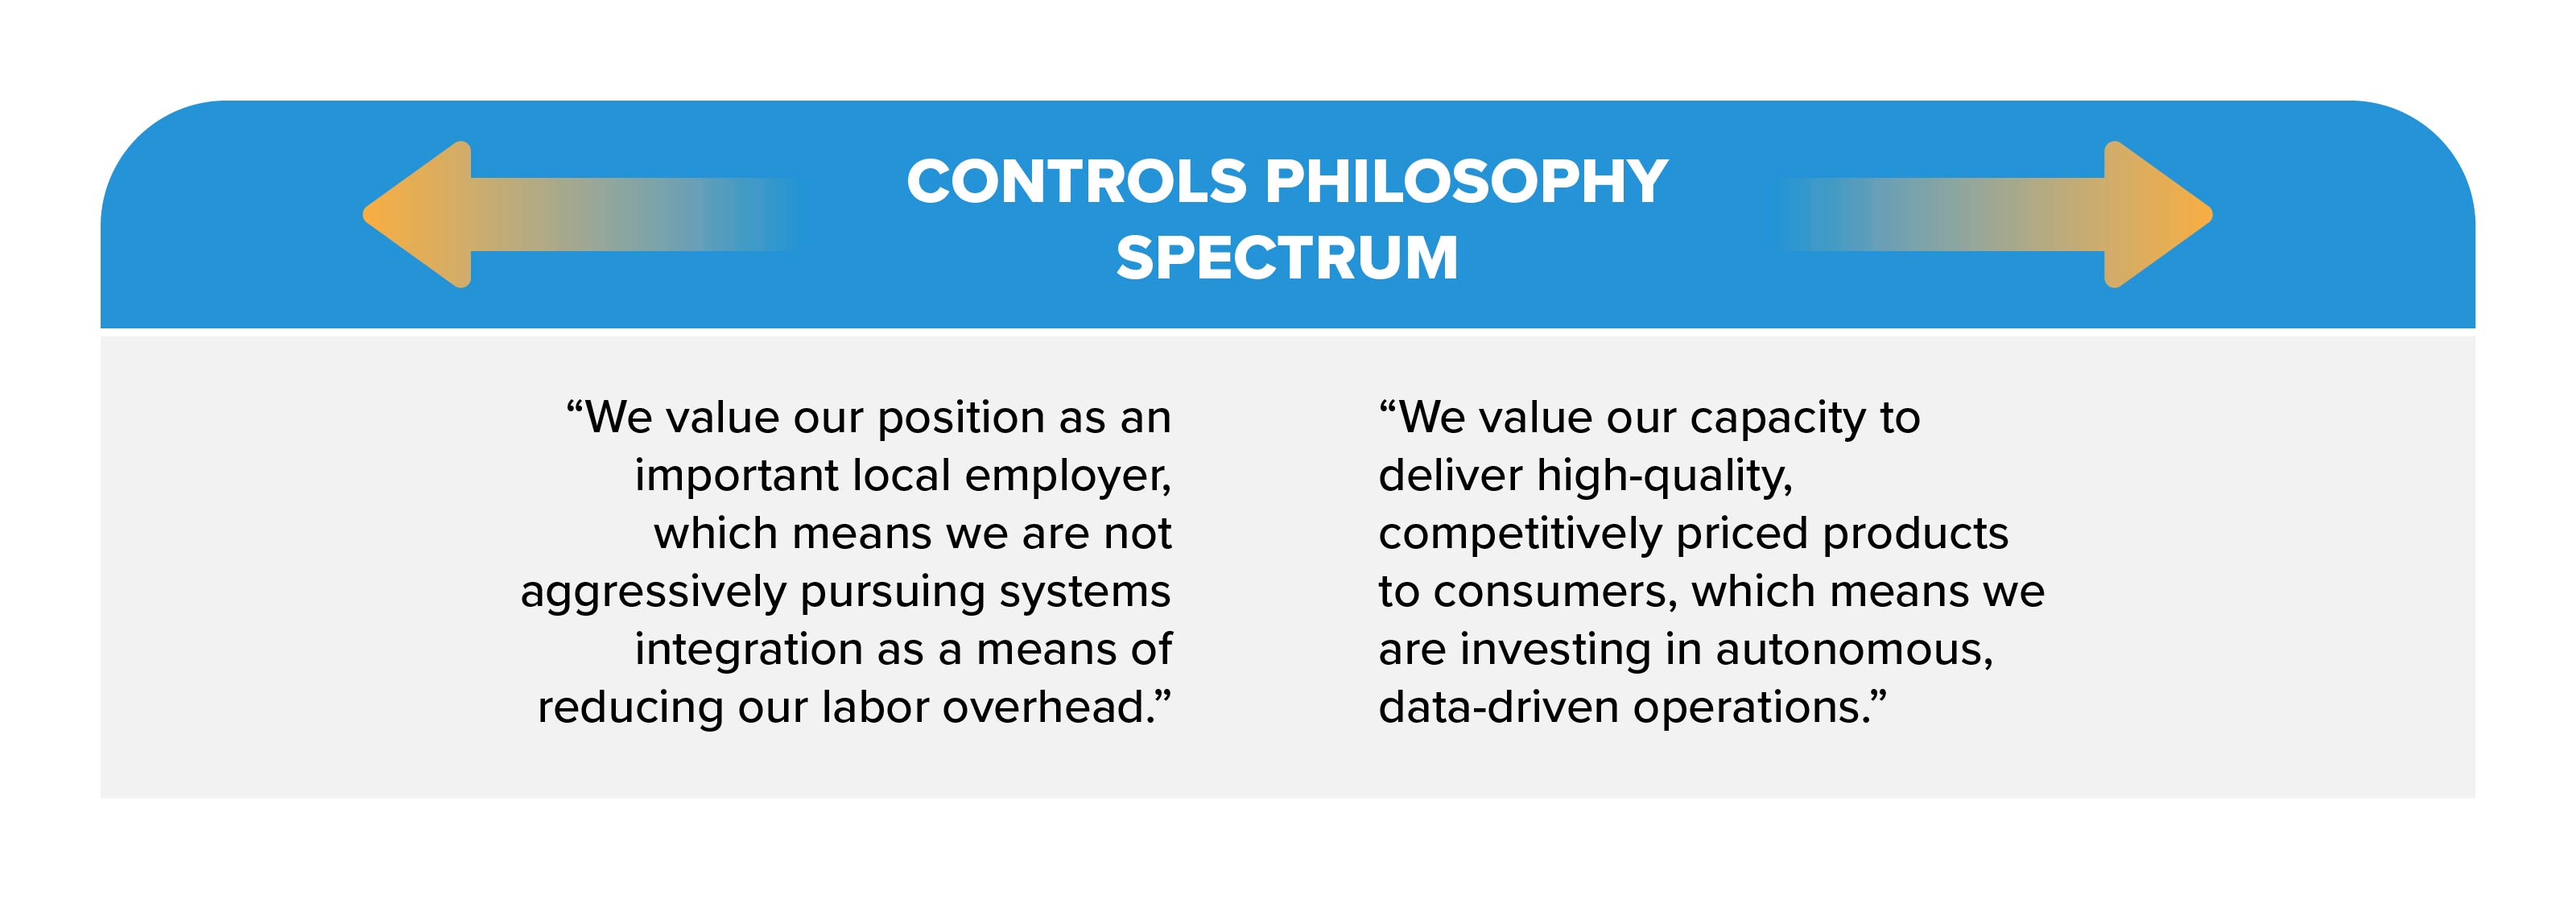 quotes on controls philosophy spectrum